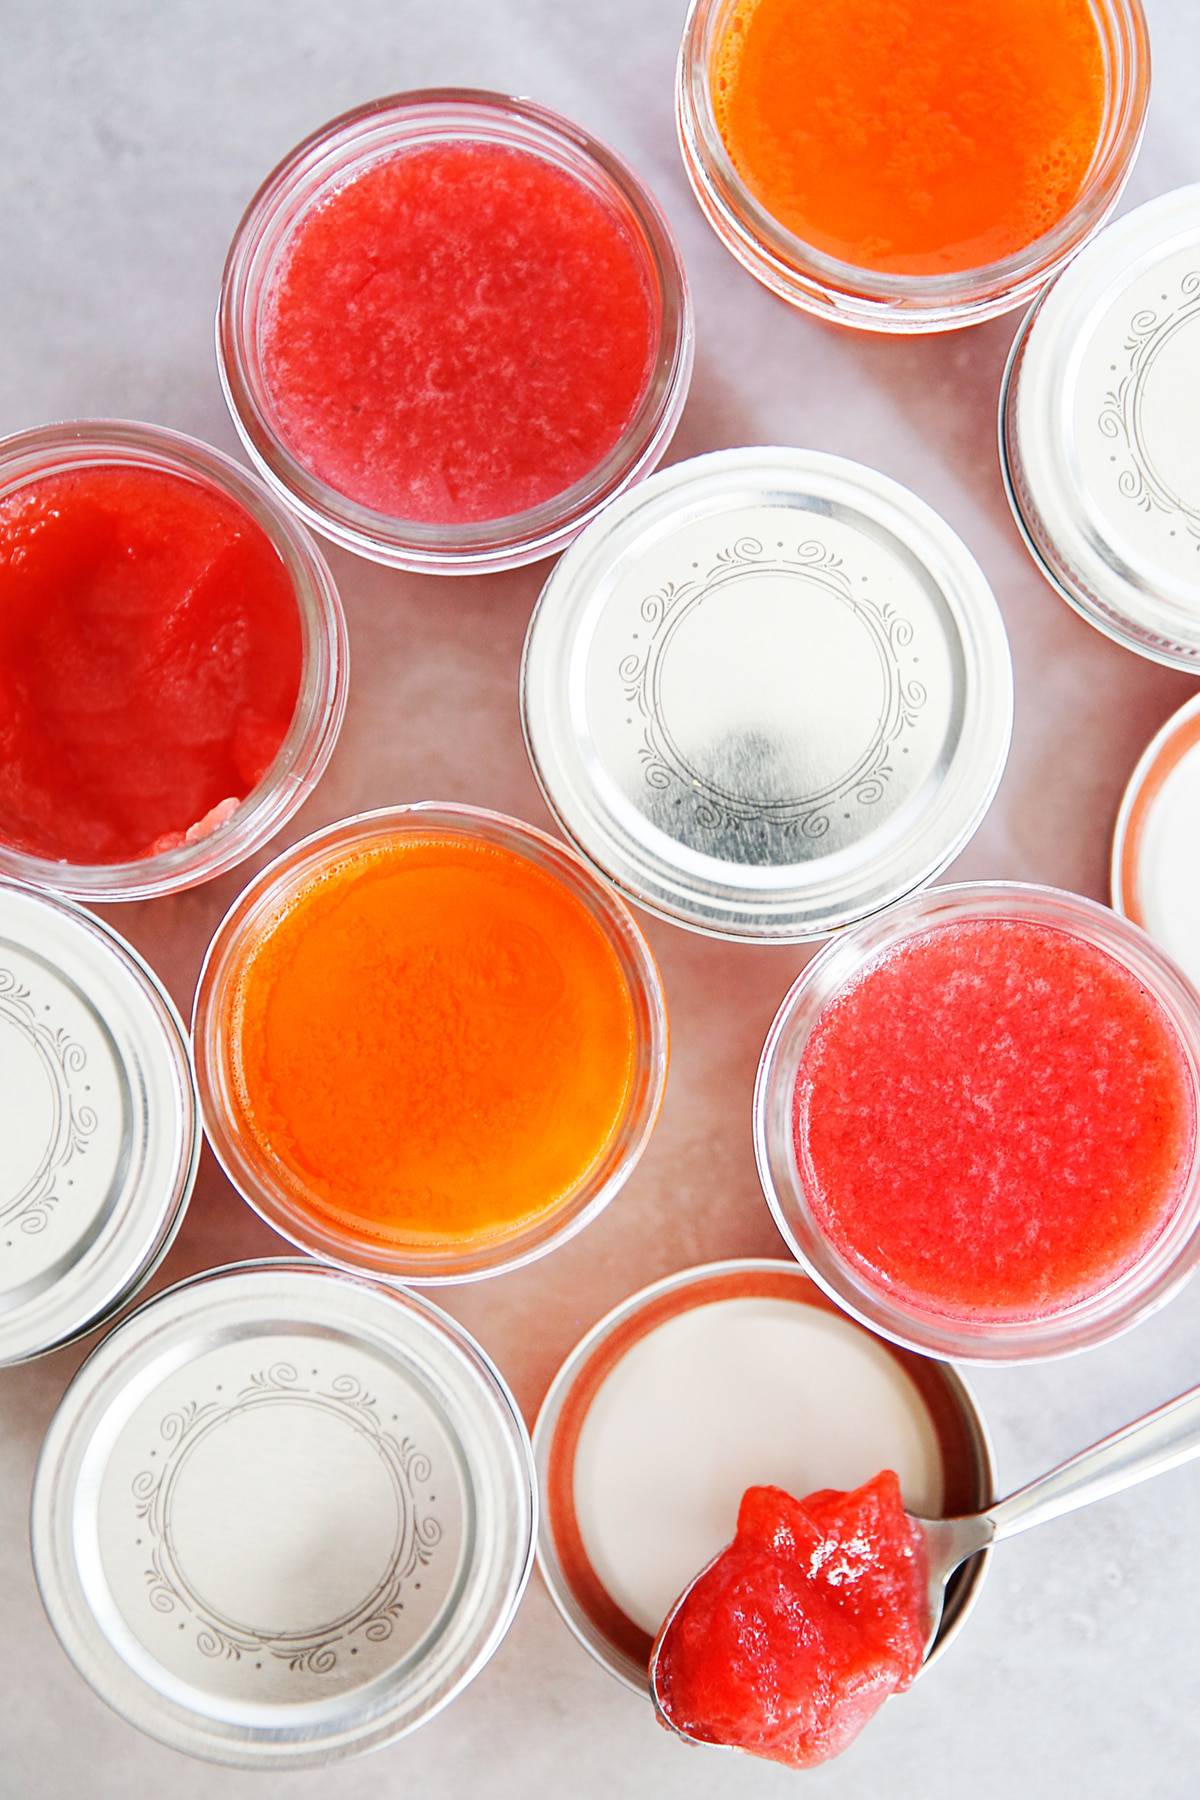 how do you make jello gelatin